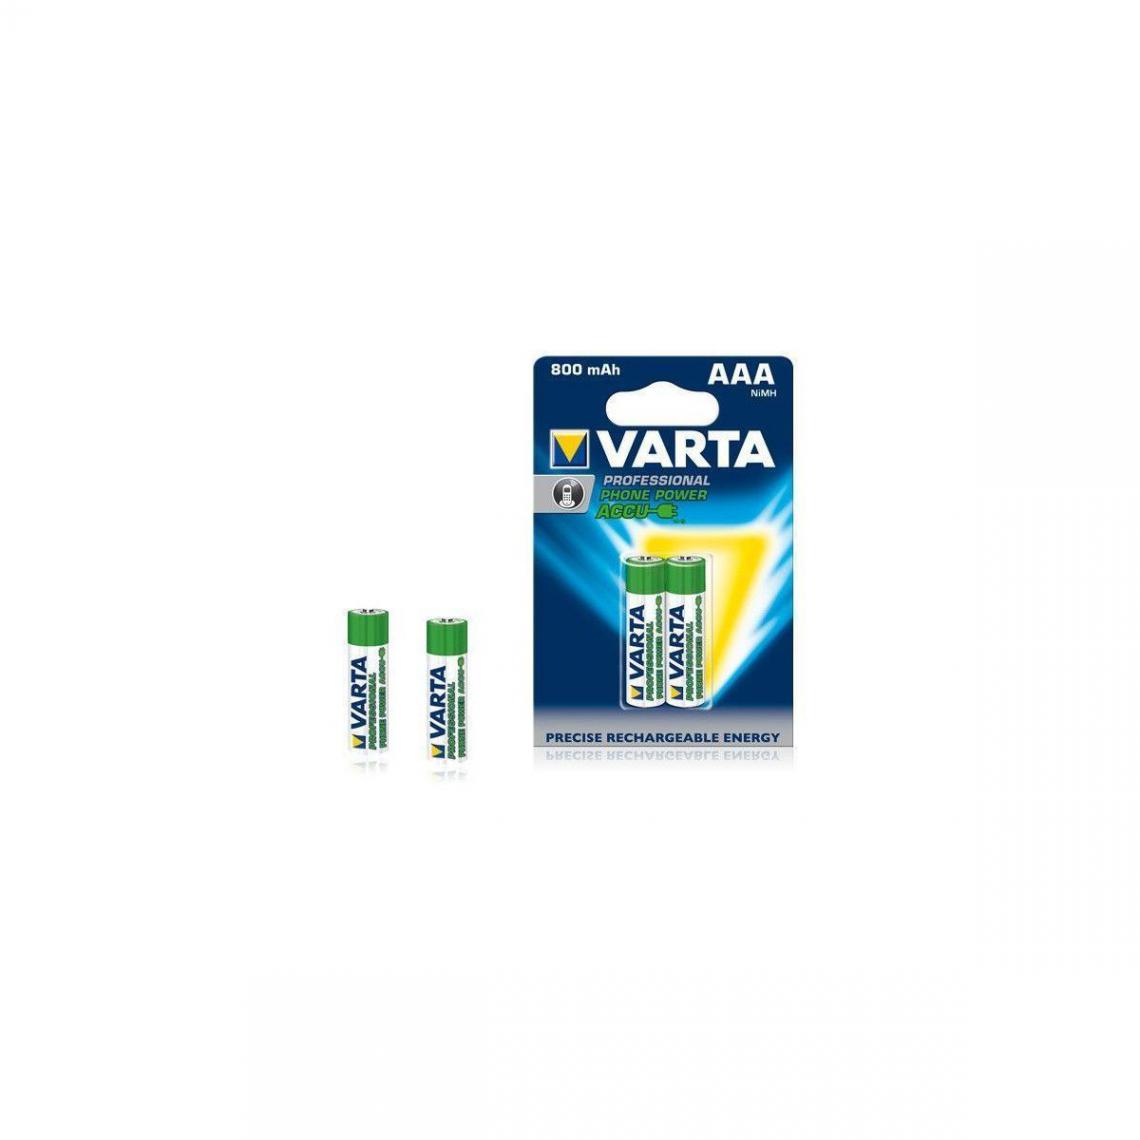 Varta - Piles rechargeables VARTA AAA x2 - Piles rechargeables